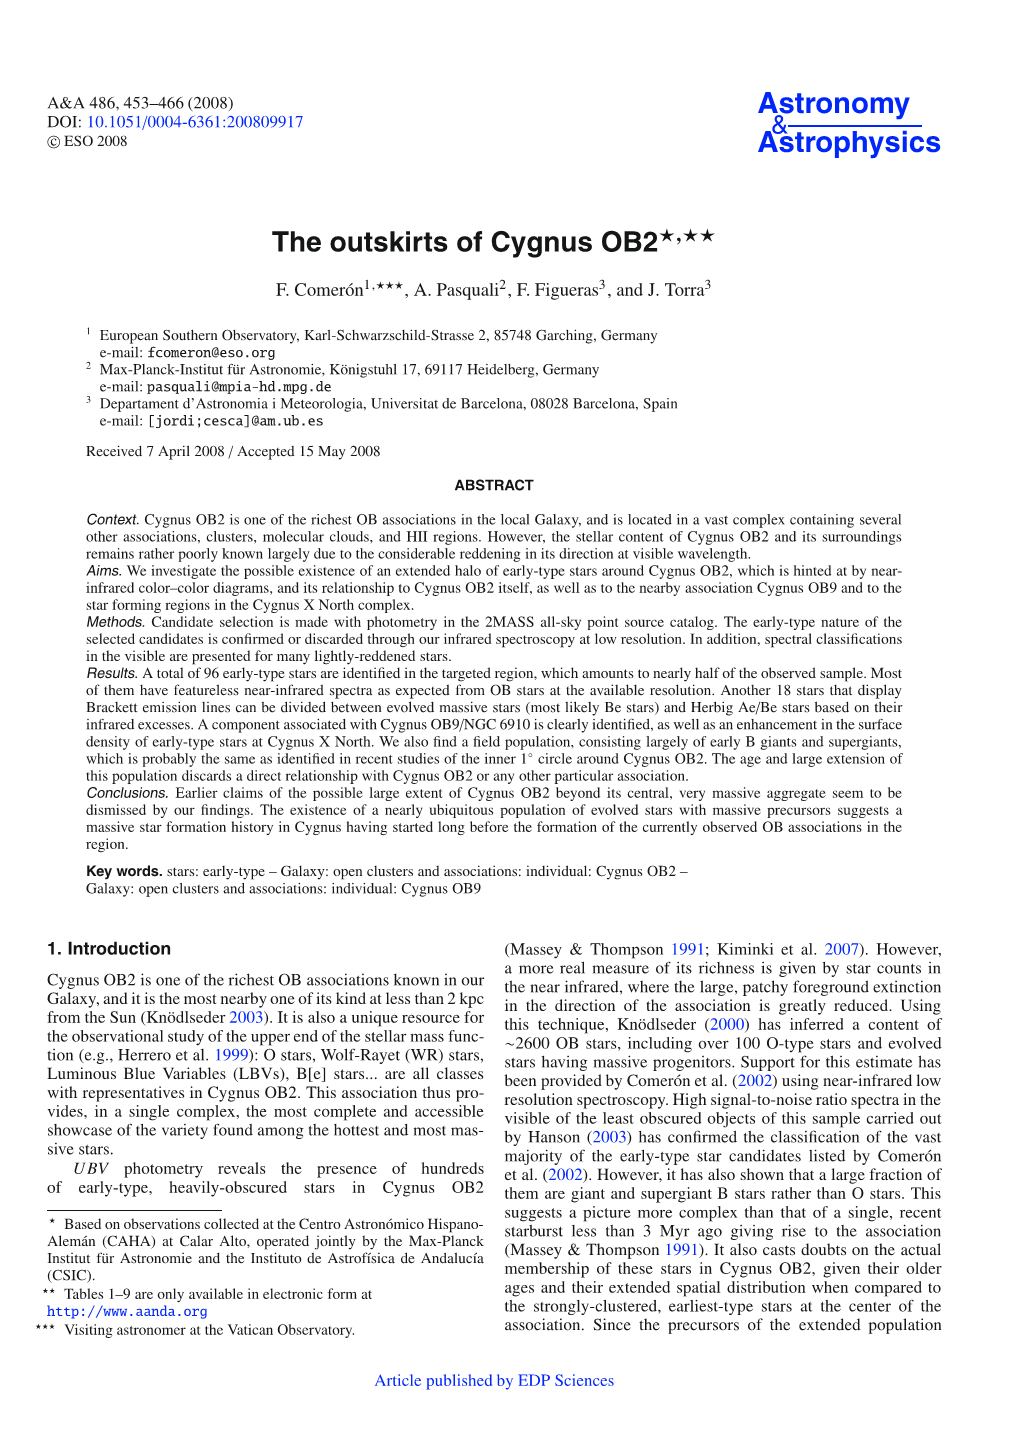 The Outskirts of Cygnus OB2�,